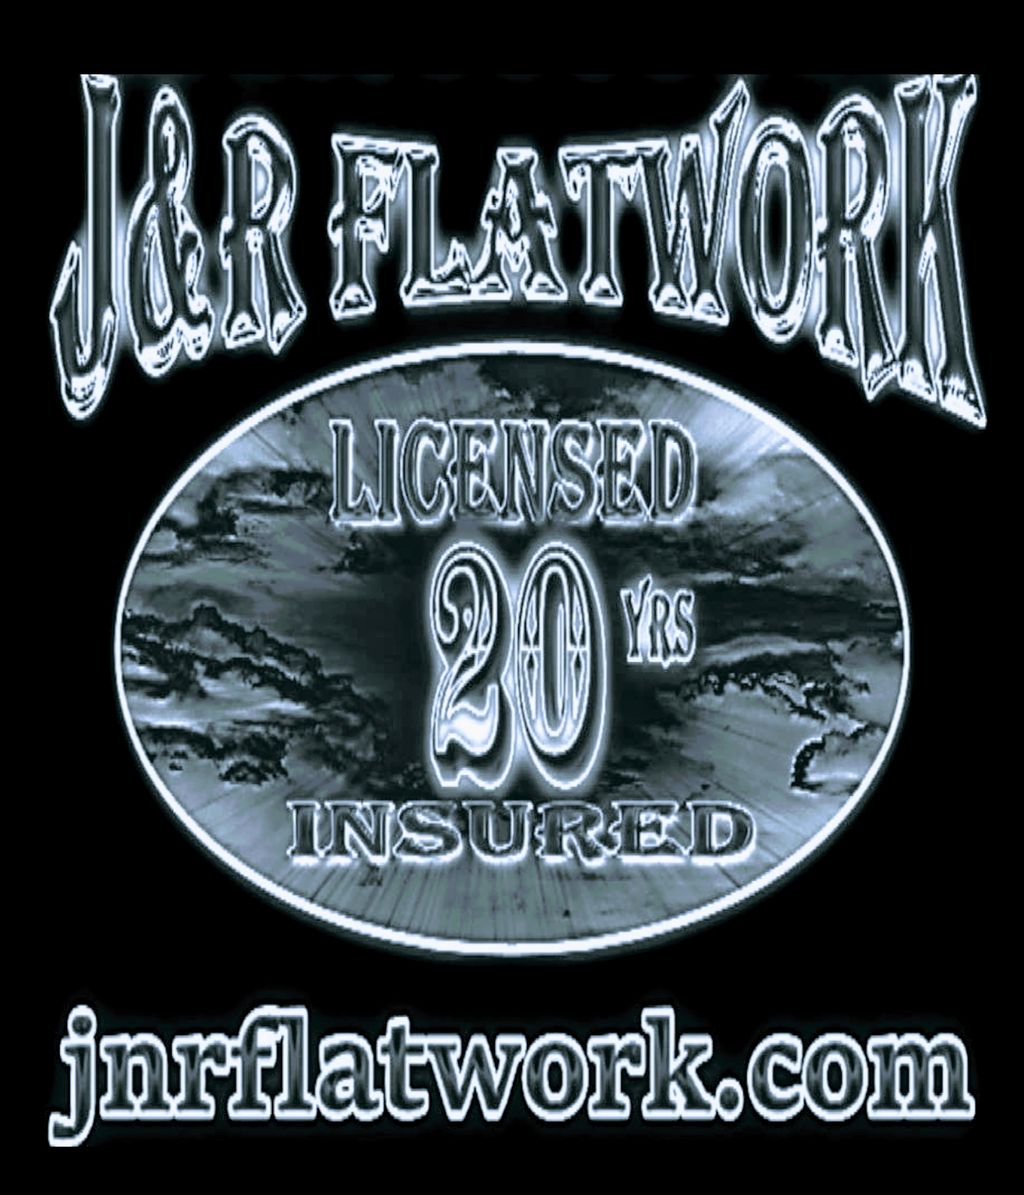 J&R FLATWORK